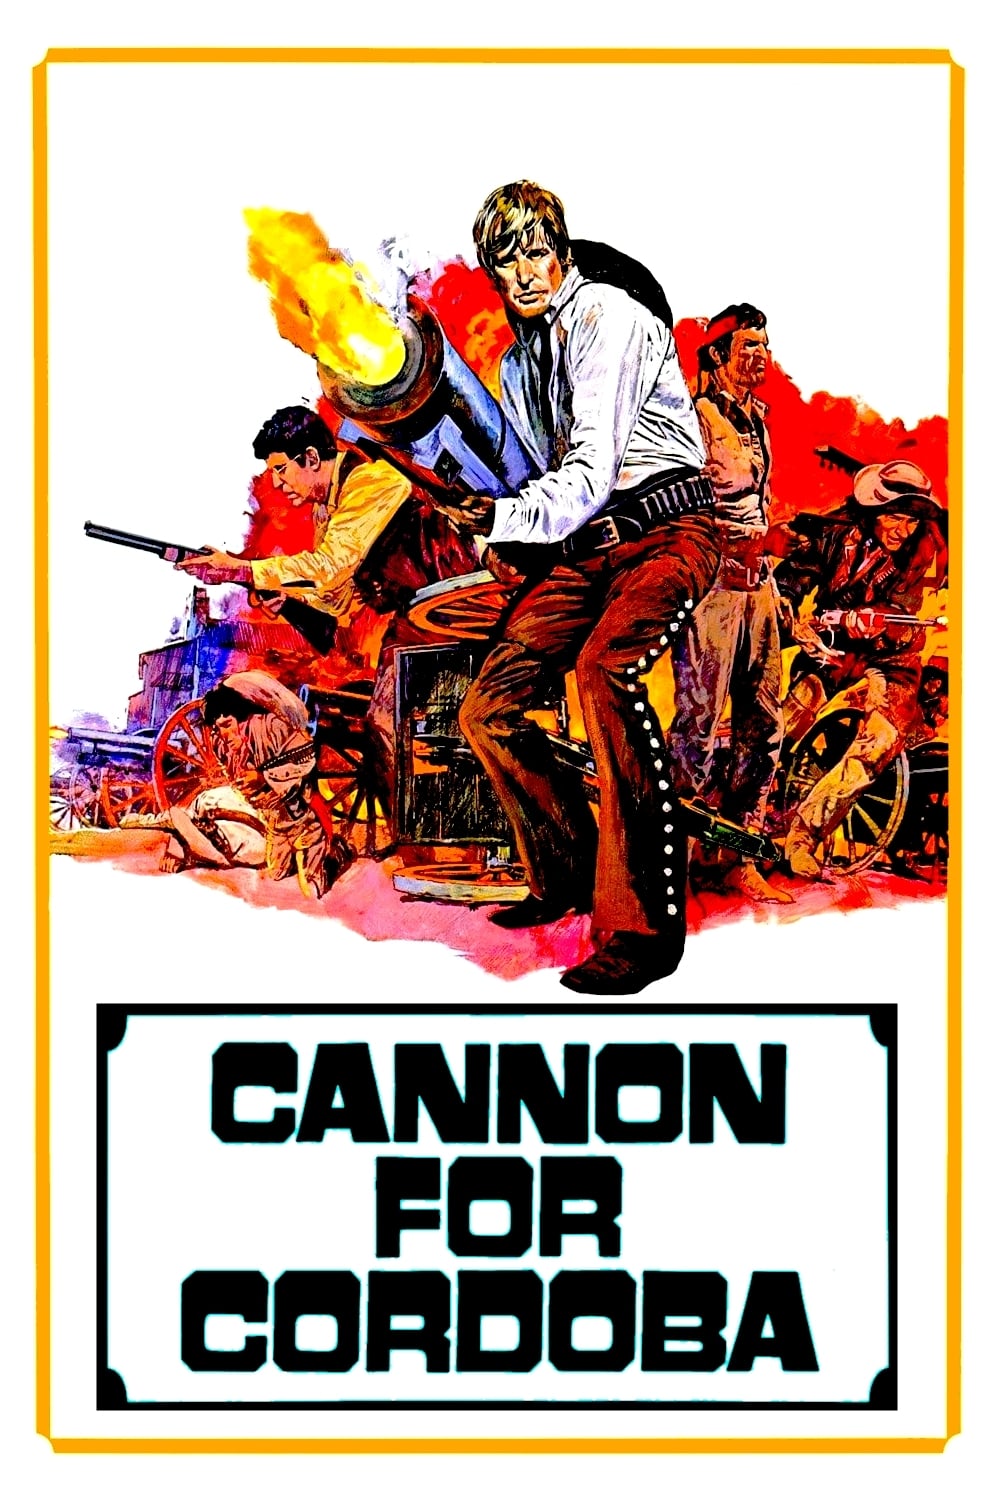 Cannon for Cordoba